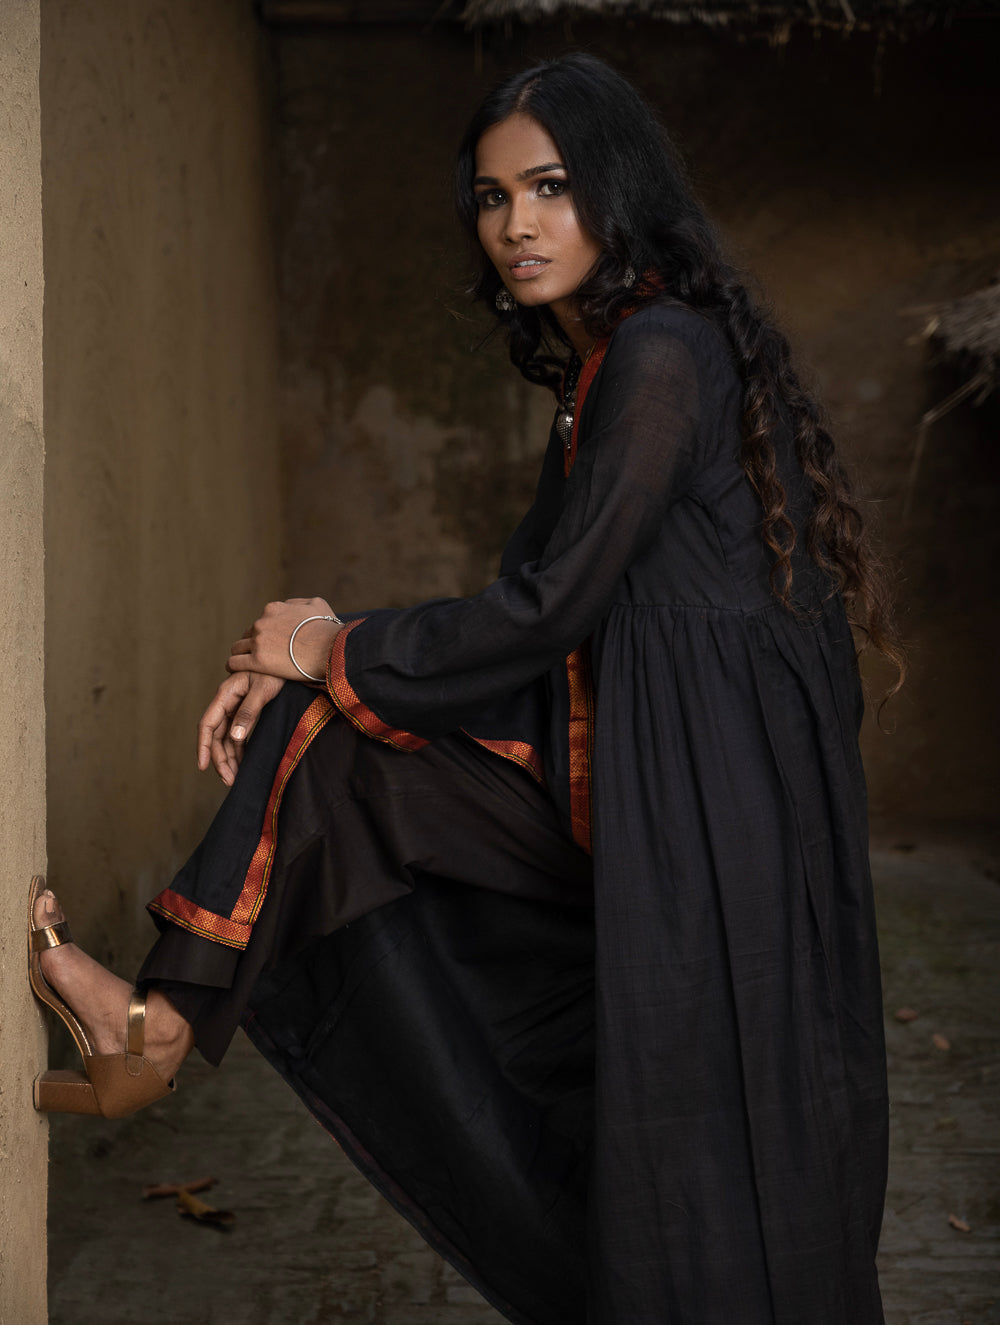 Load image into Gallery viewer, Traditional Elegance. Hand Embroidered Ilkal &amp; Zardozi Ethnic  Kurta / Dress - Regal Black 